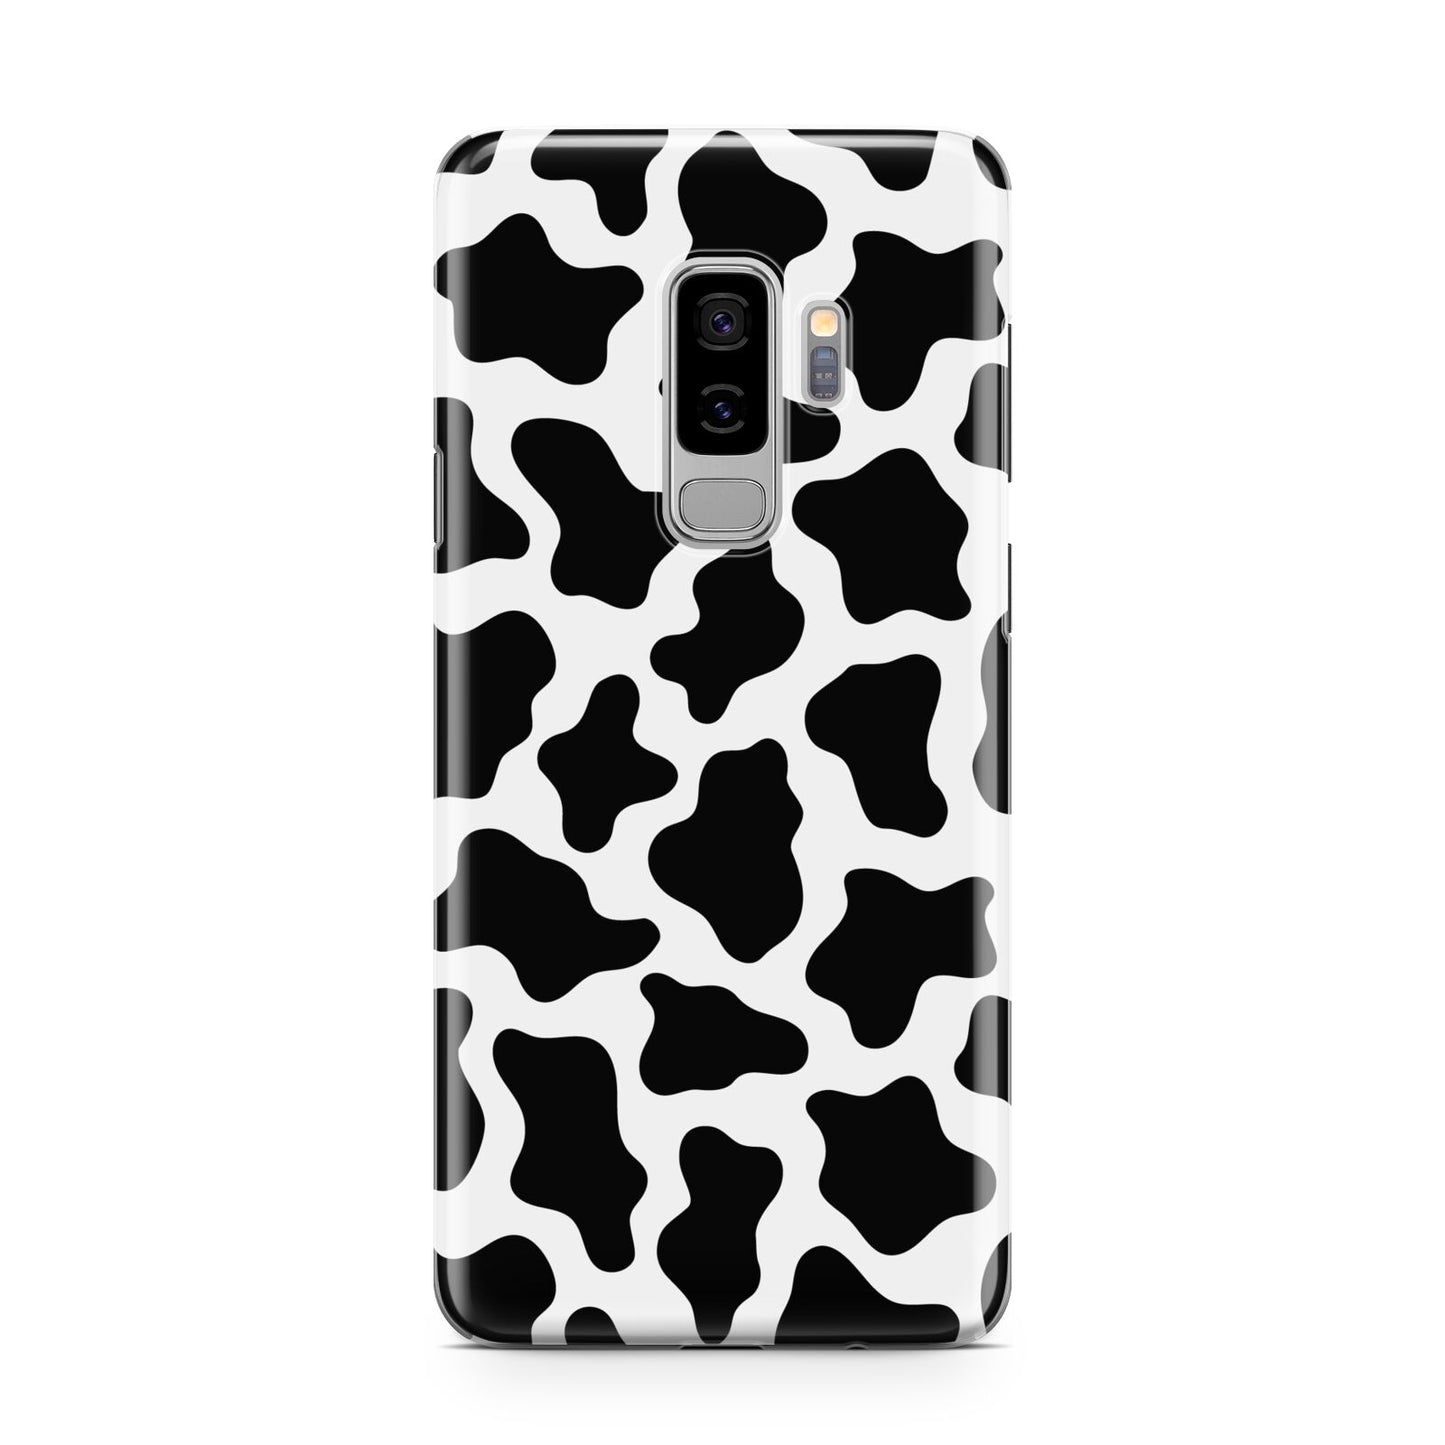 Cow Print Samsung Galaxy S9 Plus Case on Silver phone